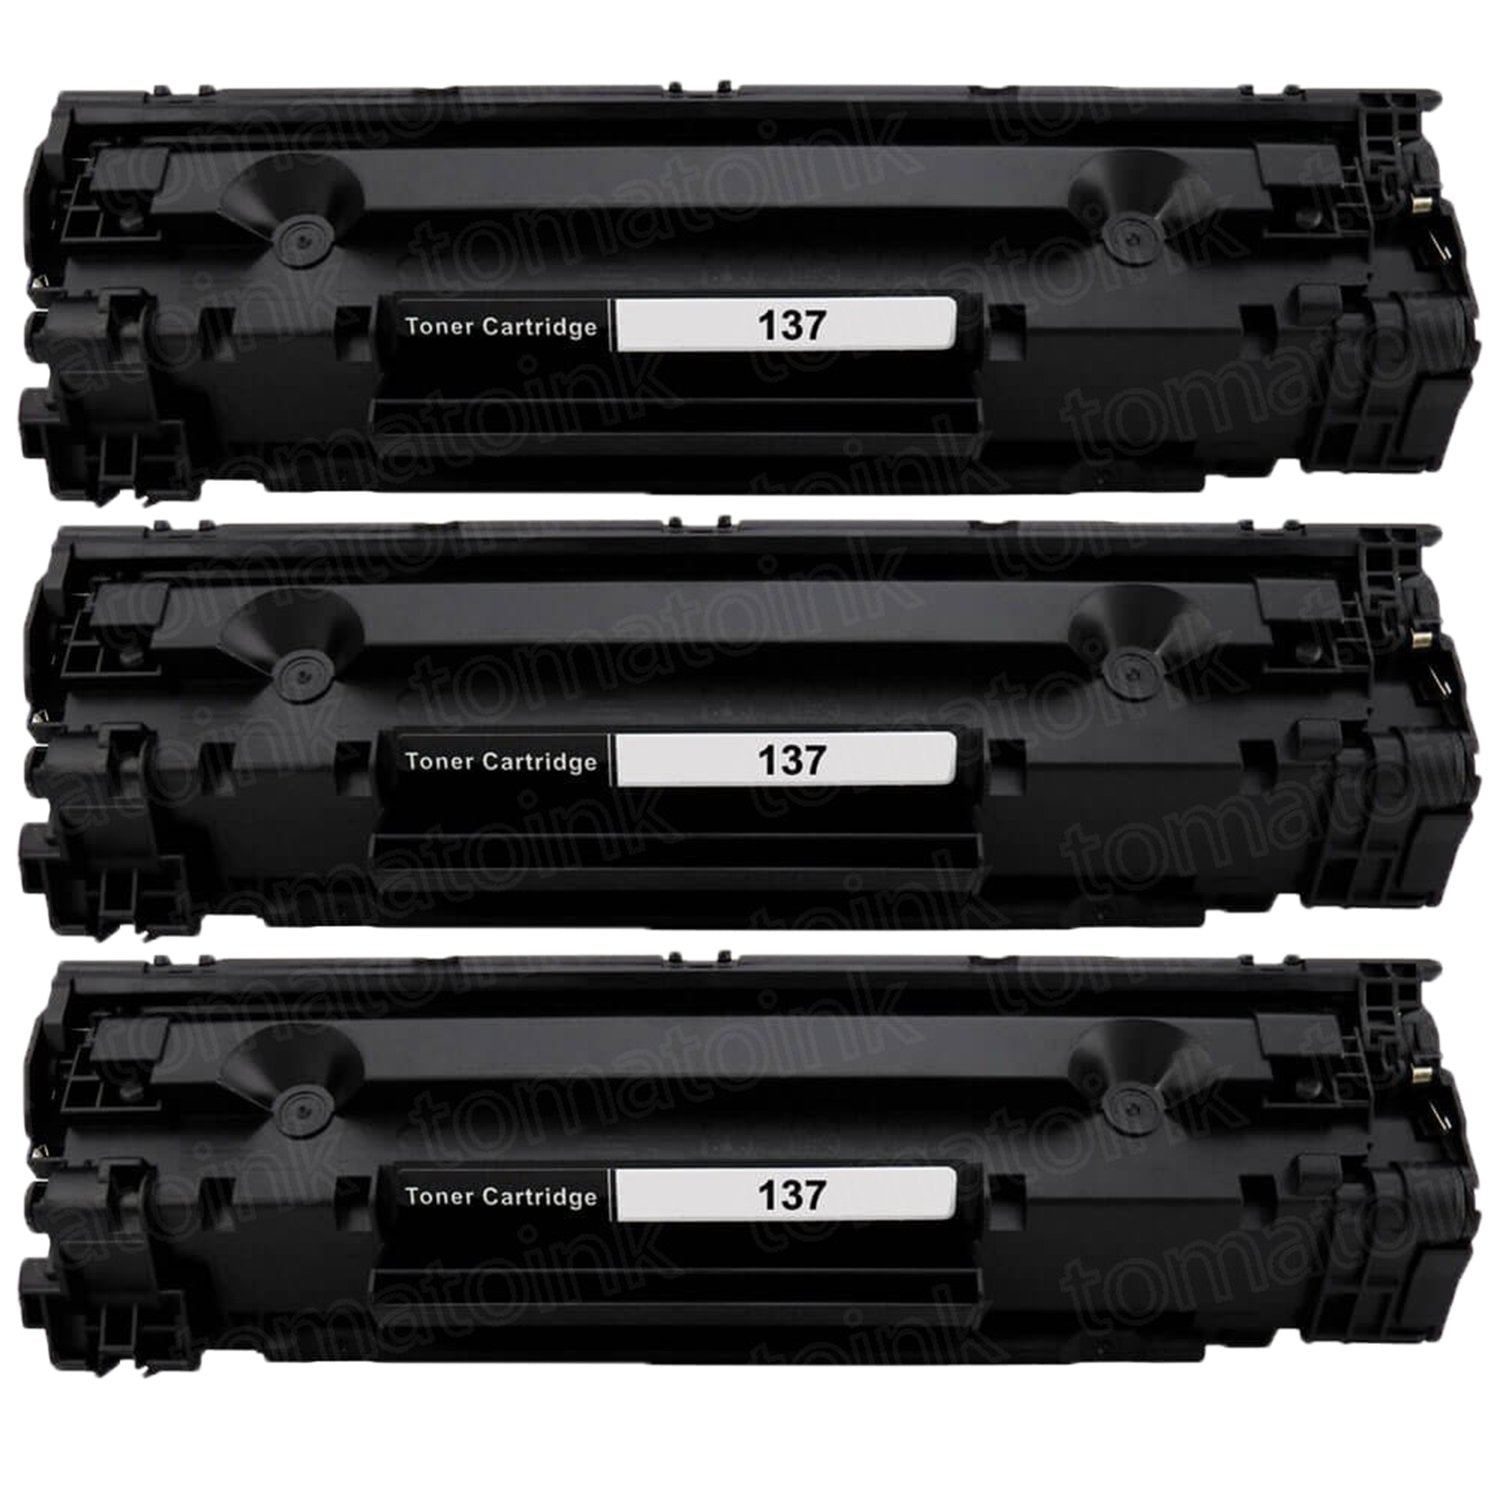 Absolute Toner Compatible Canon 137 Black Toner Cartridge | Absolute Toner Canon Toner Cartridges